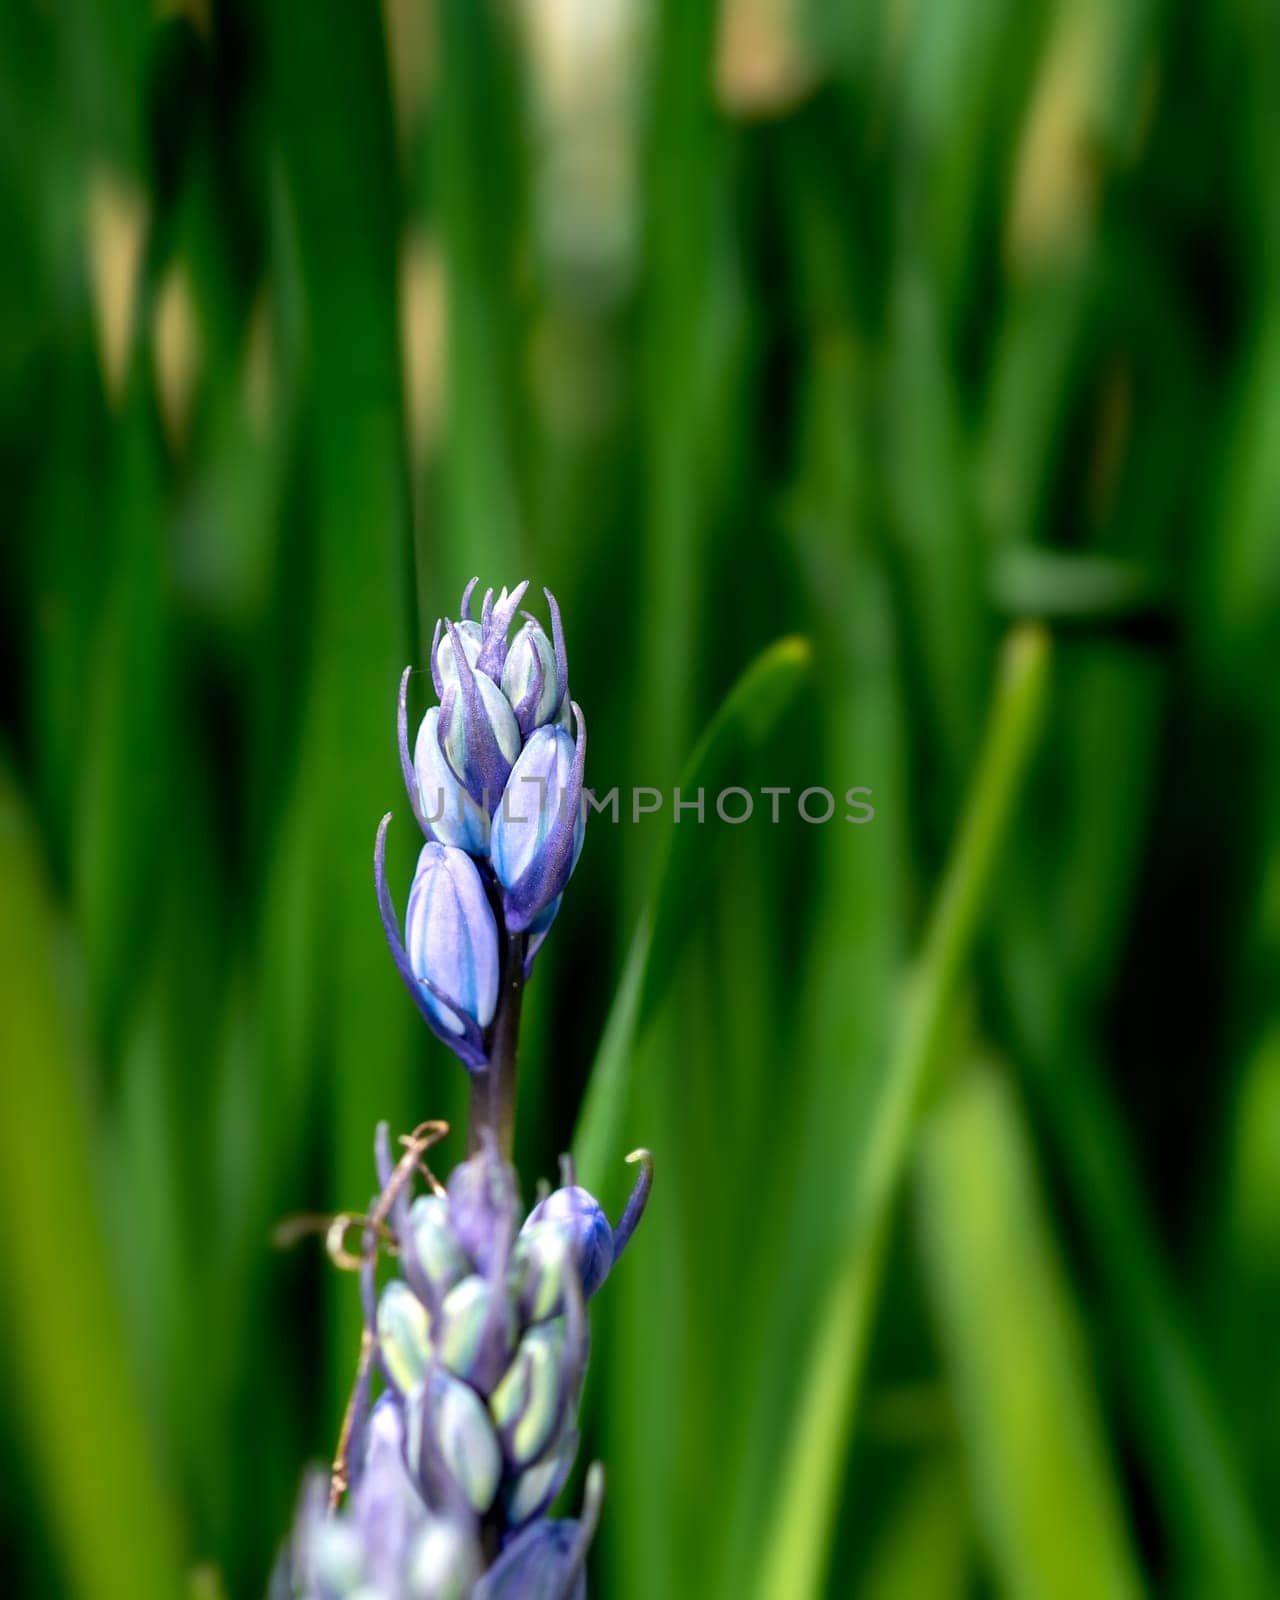 Blue Spanish bluebell flower on blurred background, detailed  photo of blue flower